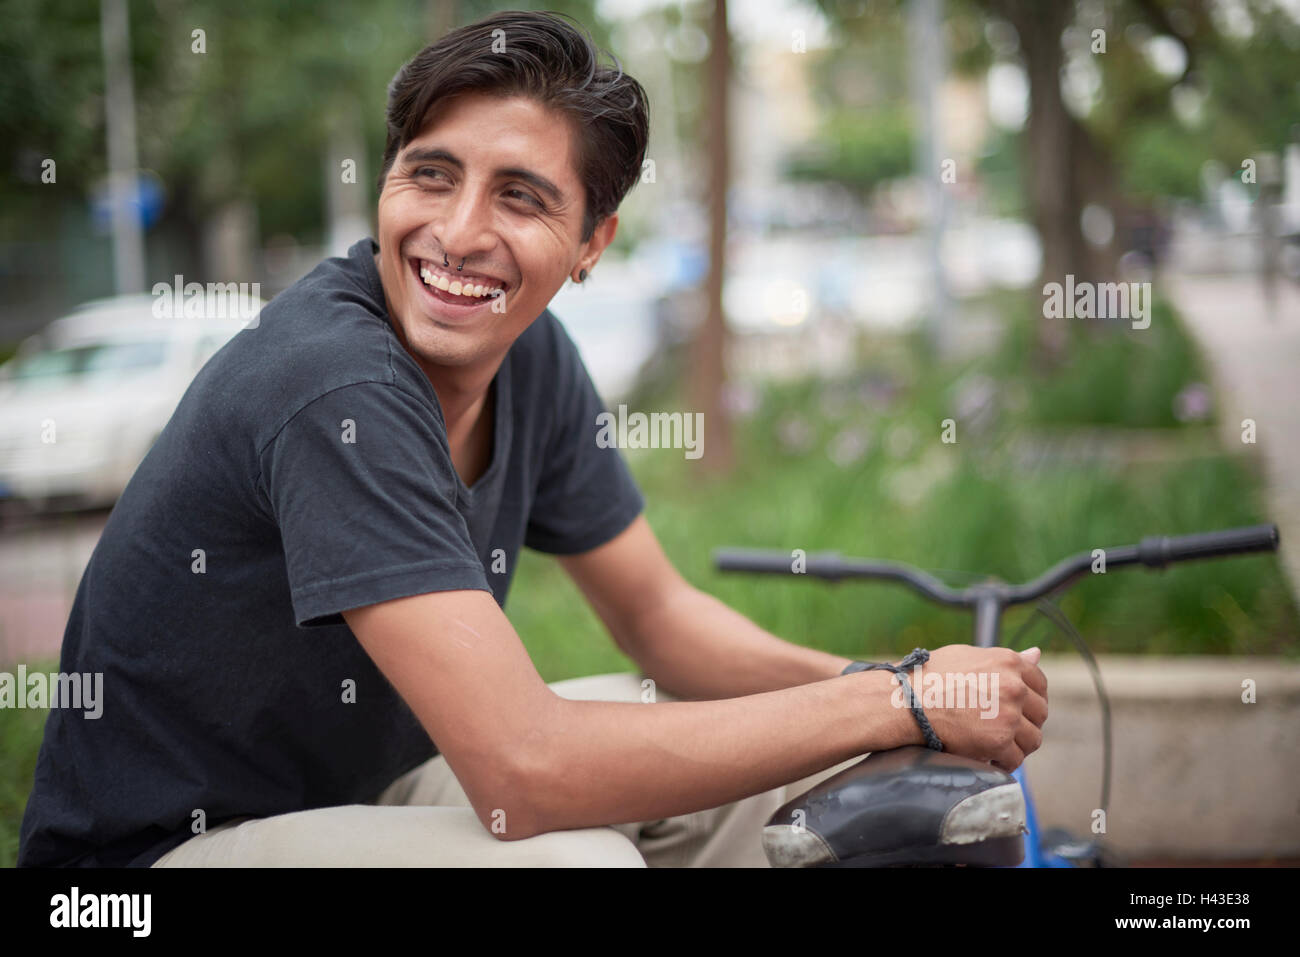 Laughing Hispanic man sitting with bicycle Stock Photo